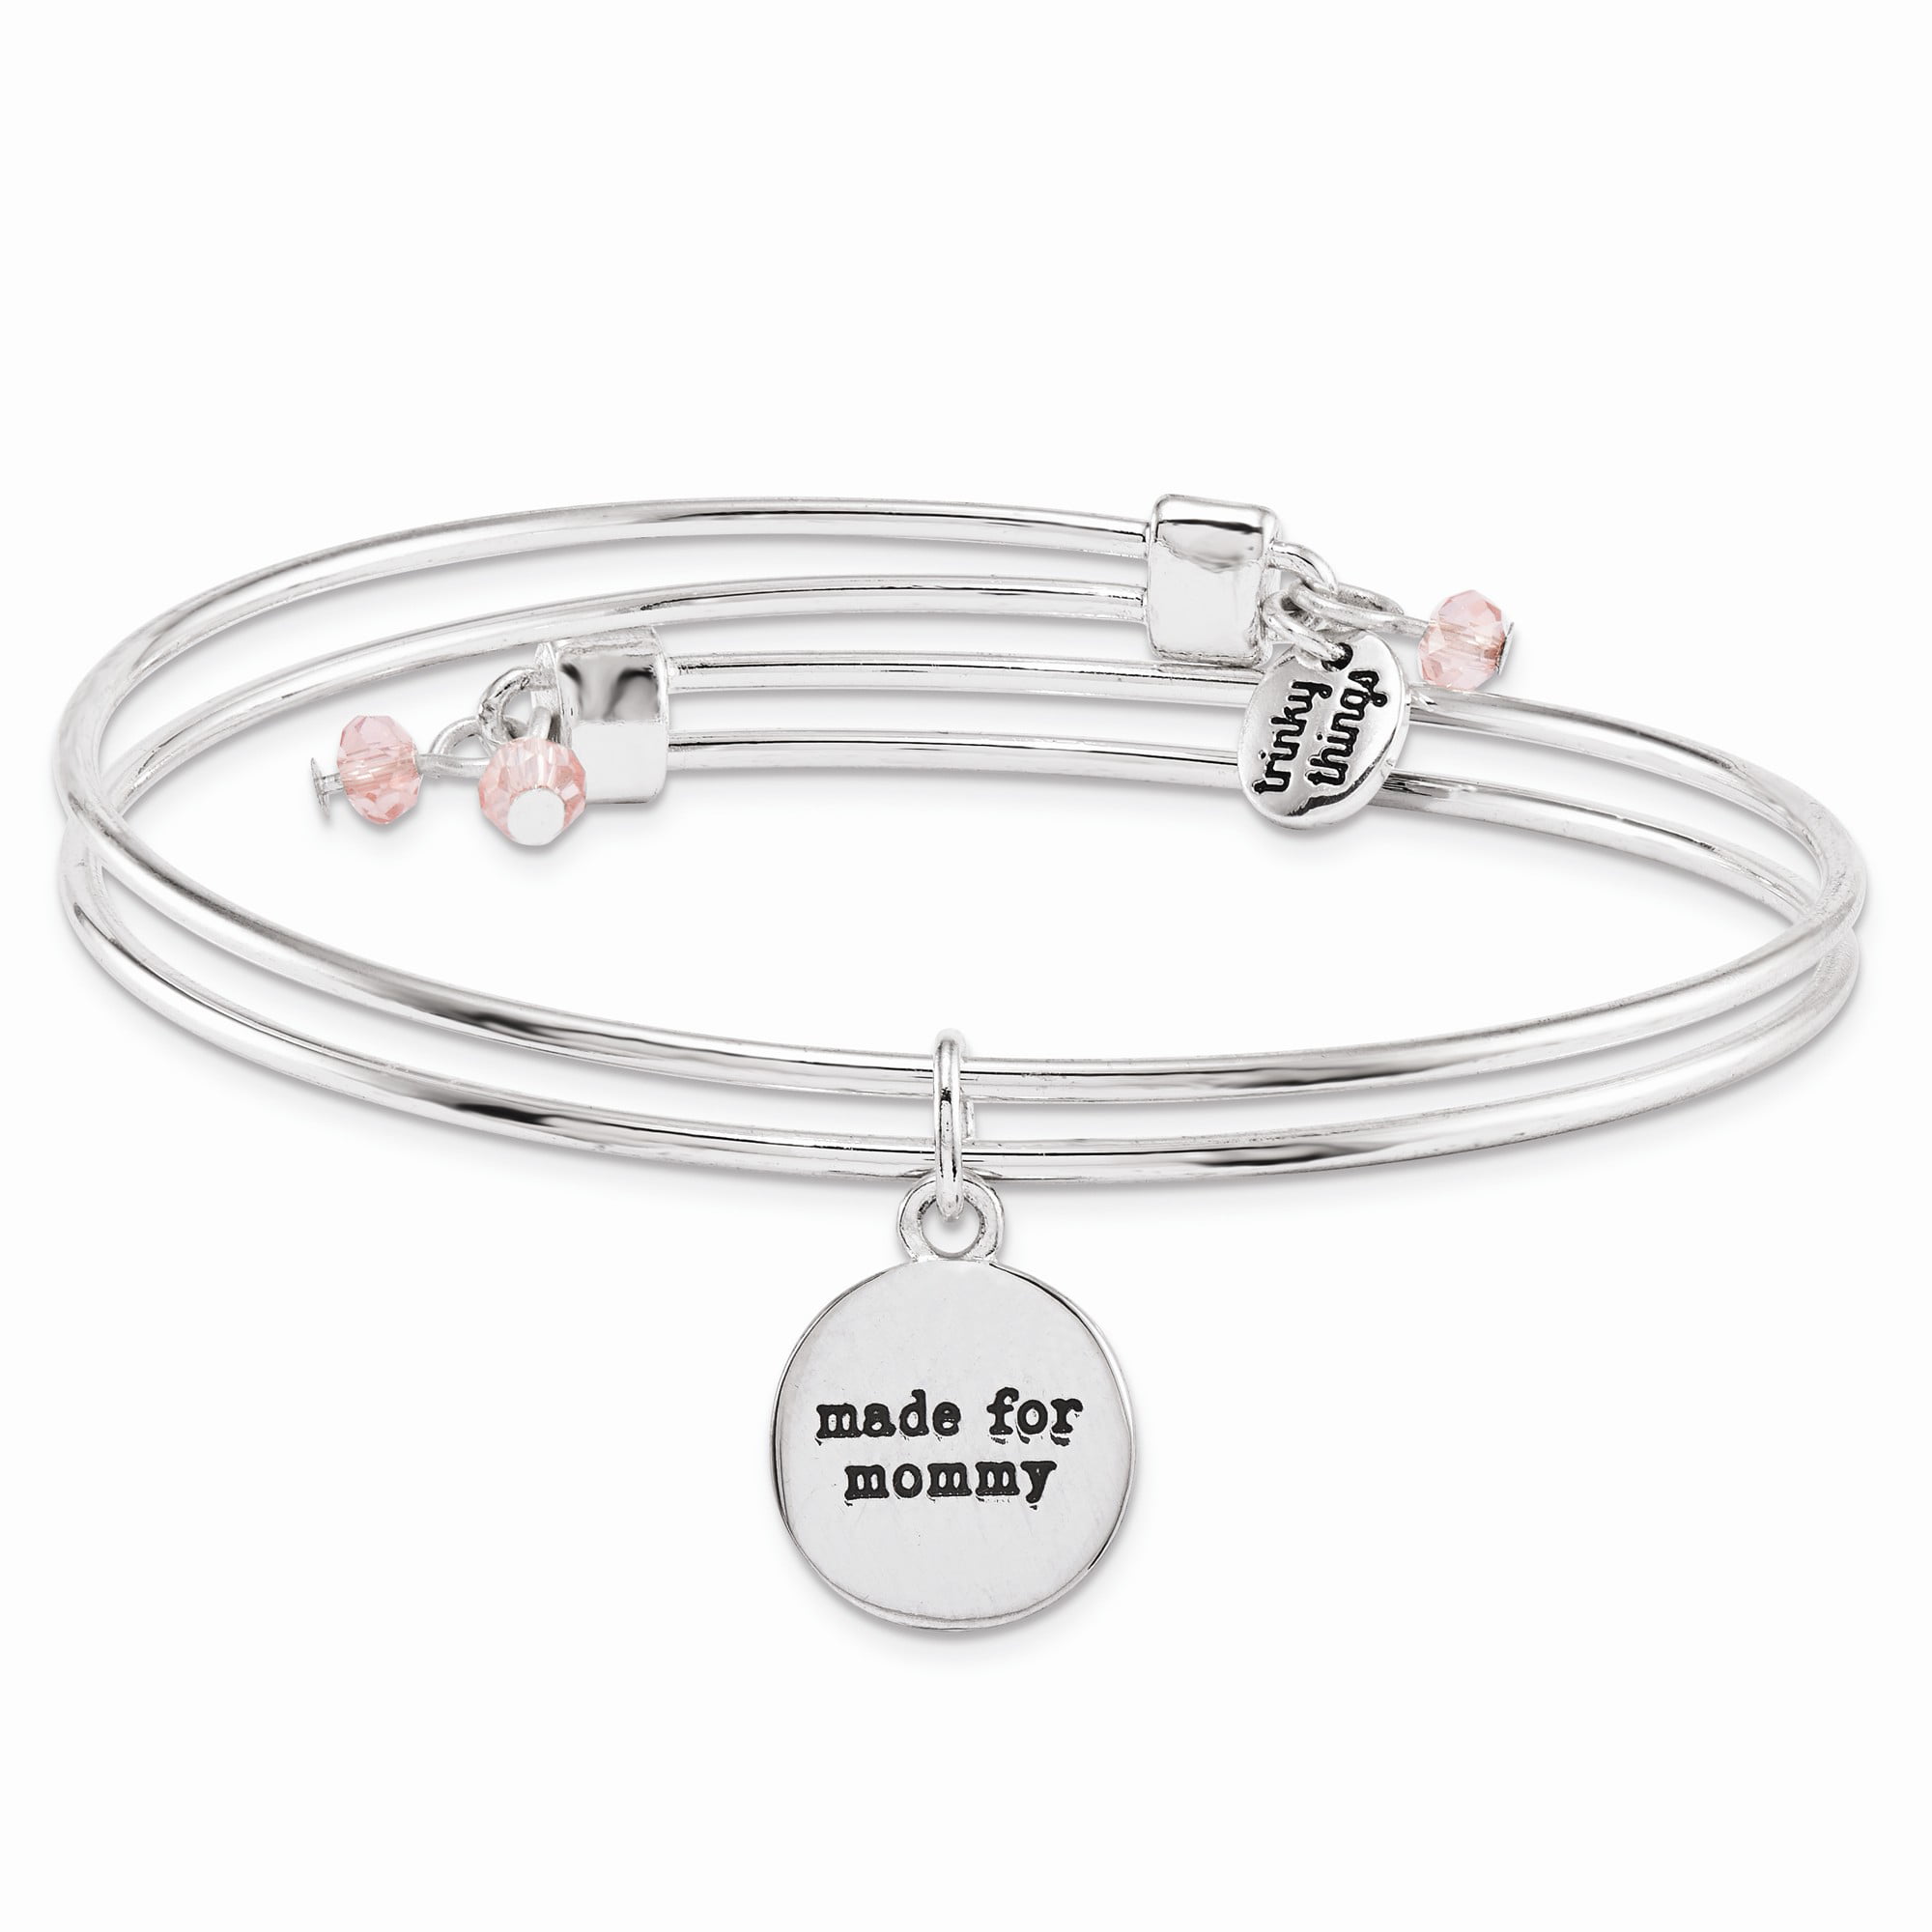 Bonyak Jewelry Silver-Tone Trinky Things Its a Pink Bracelet/Card